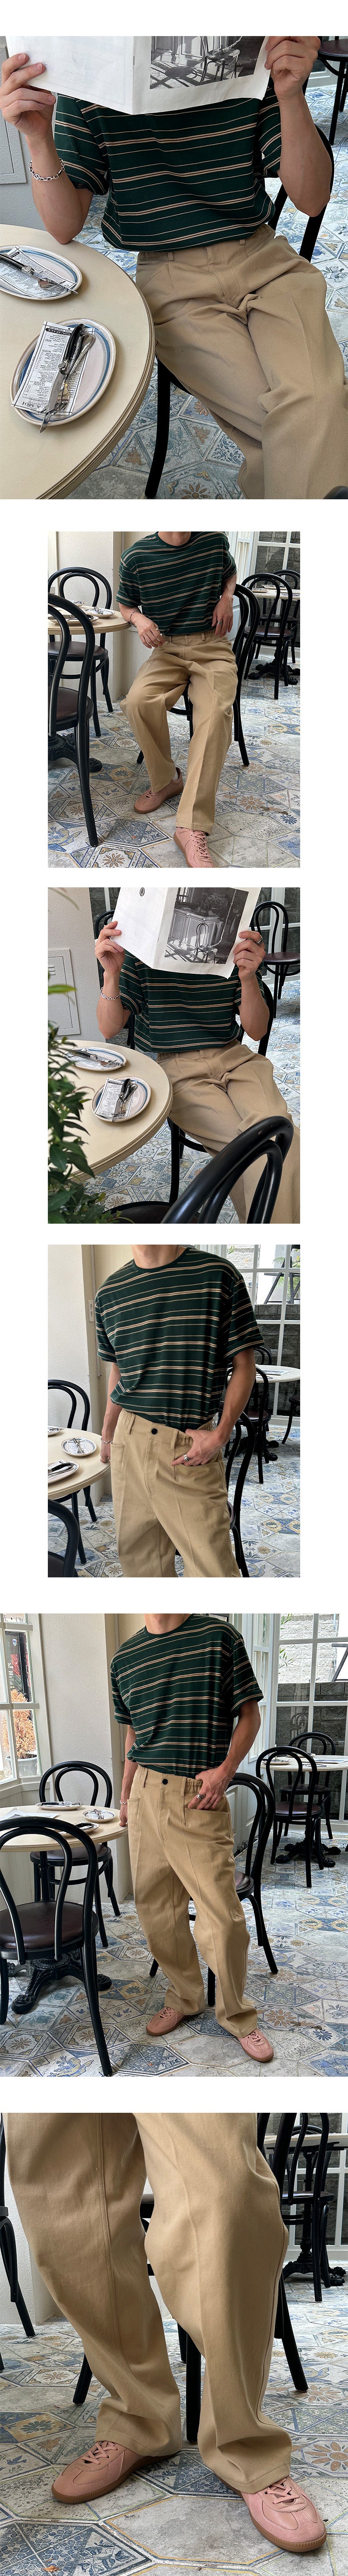 [S/S]Mour thin stripe half t-shirts(3color)